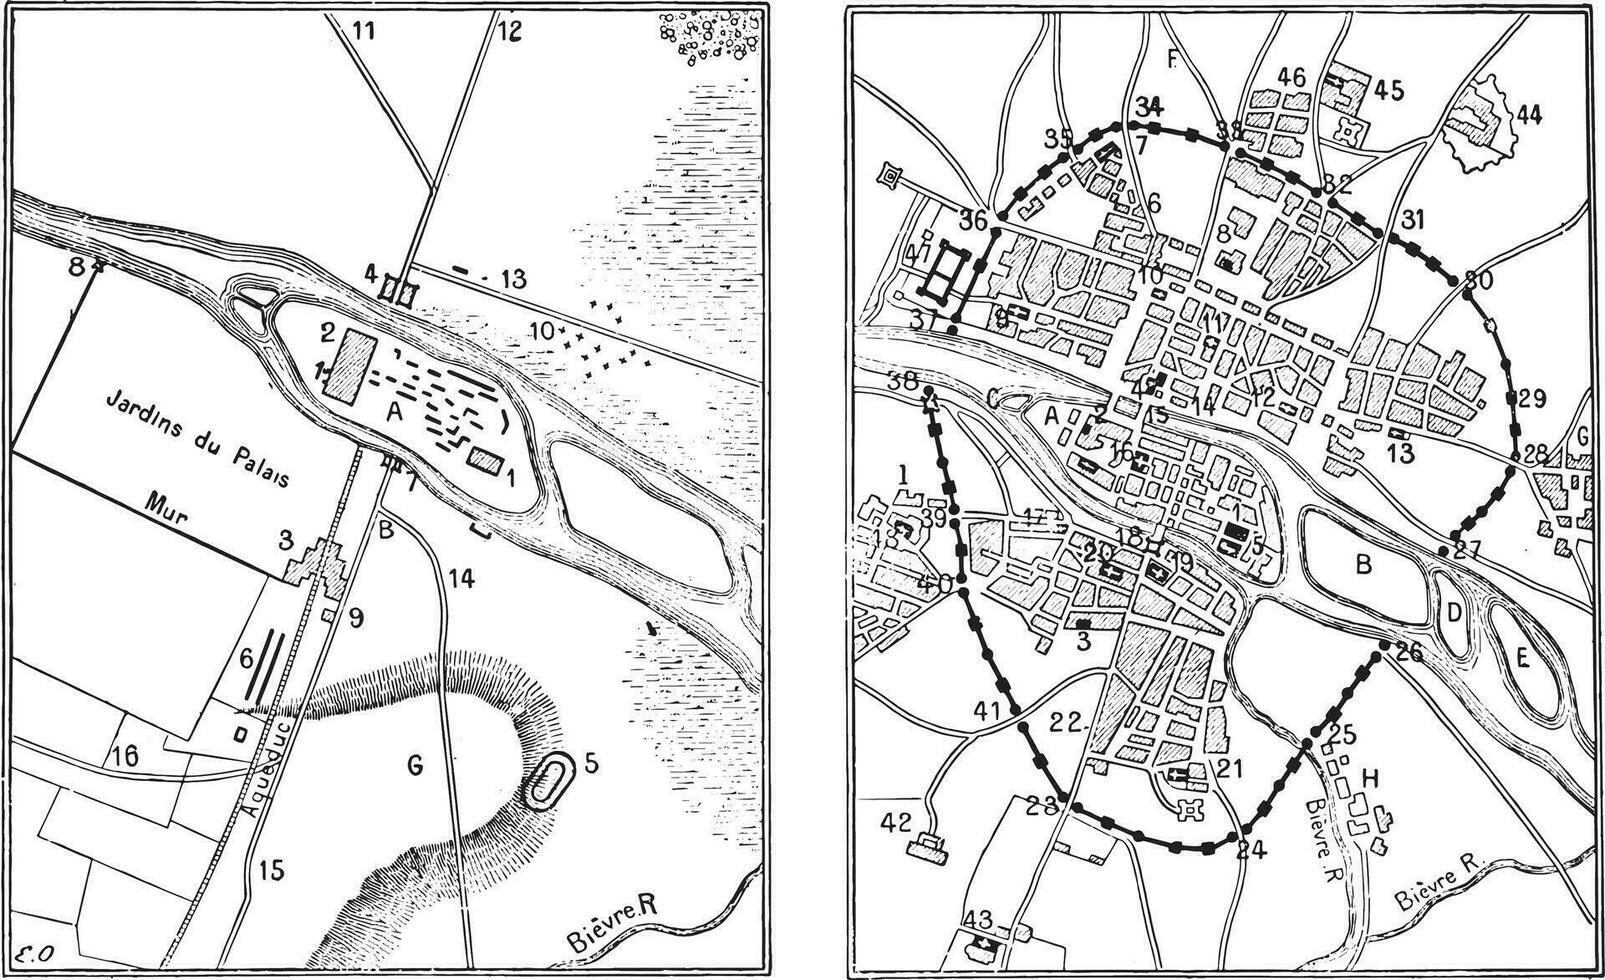 mapa do Paris galo-romano, vintage gravação. vetor